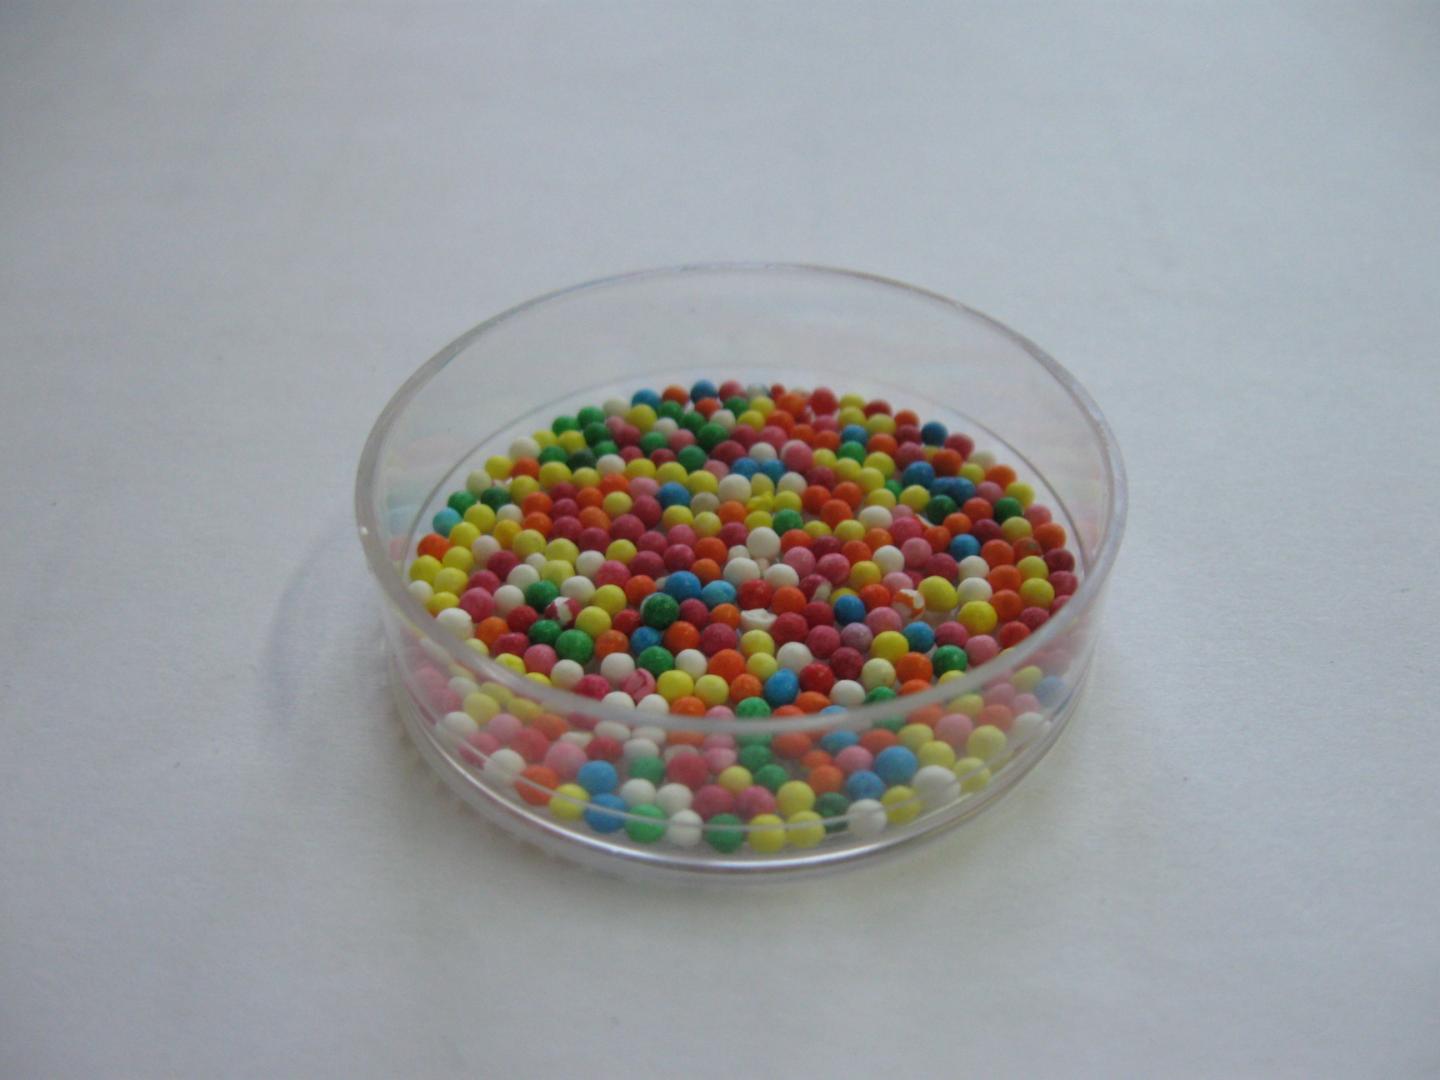 Self-Ordering of Christmas Cake Balls Decoration in Petri Dish